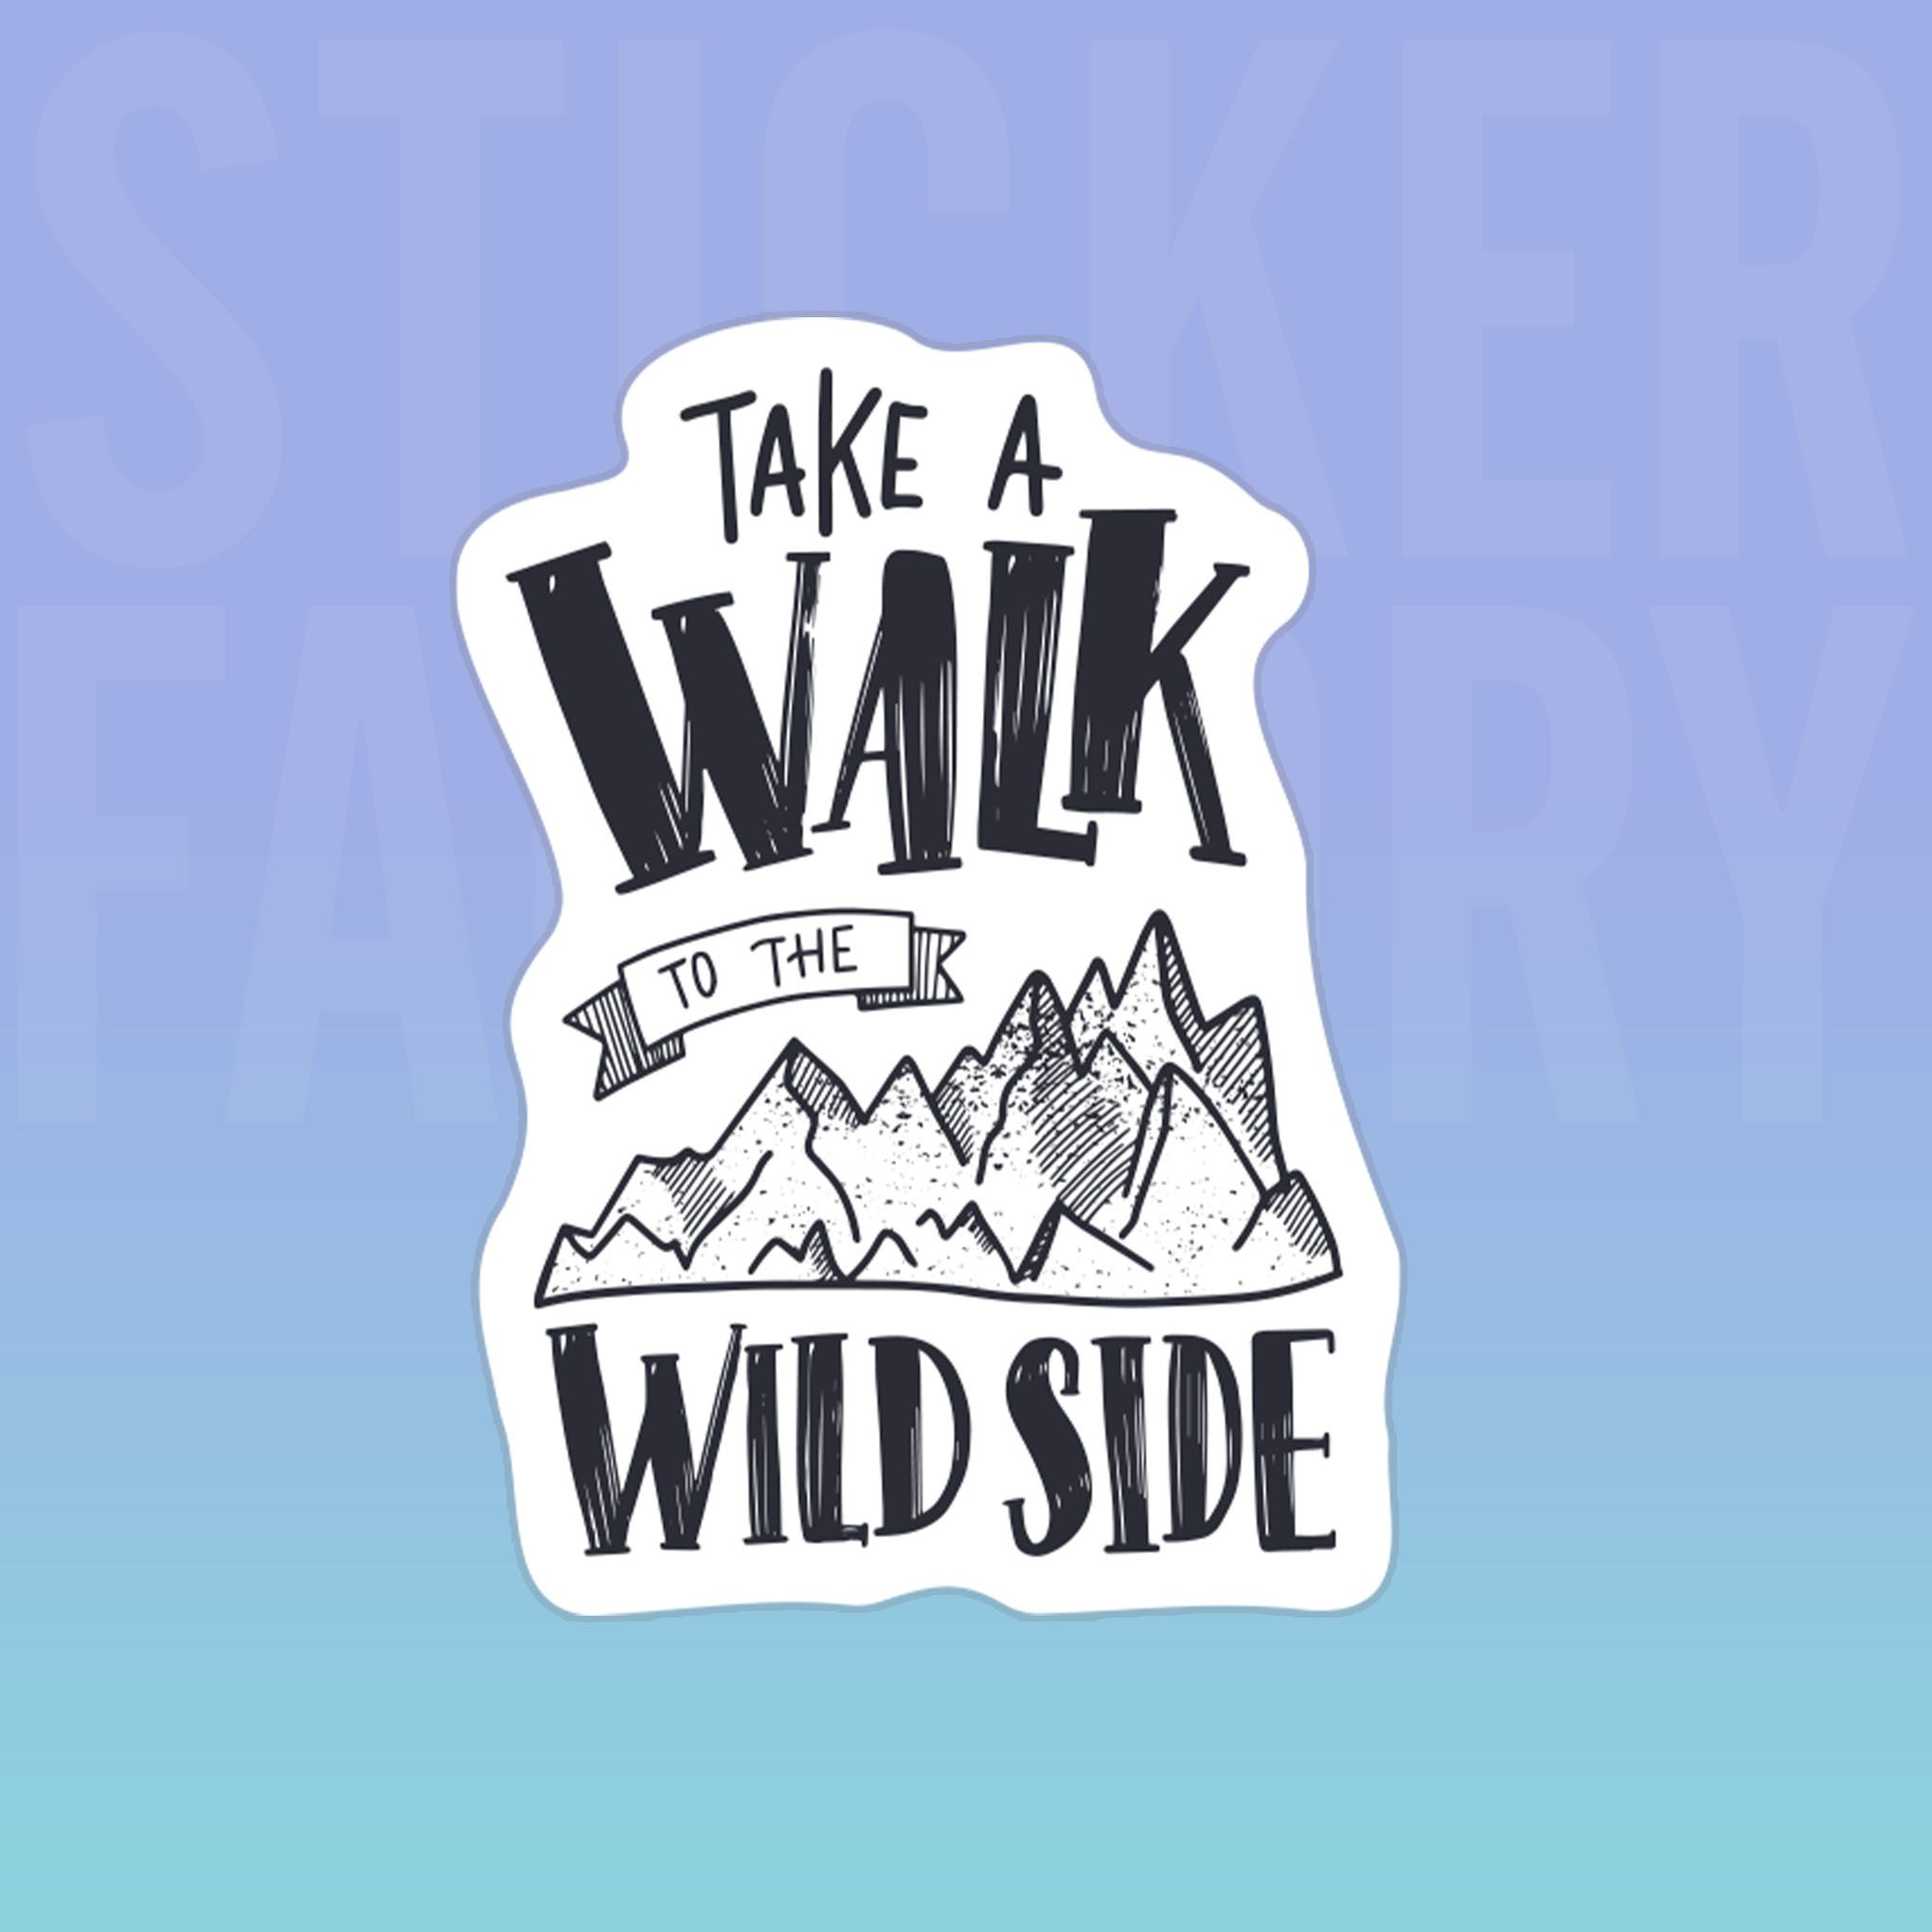 TAKE A WALK TO THE WILD SIDE 7cm - Sticker Die-cut hình dán cắt rời